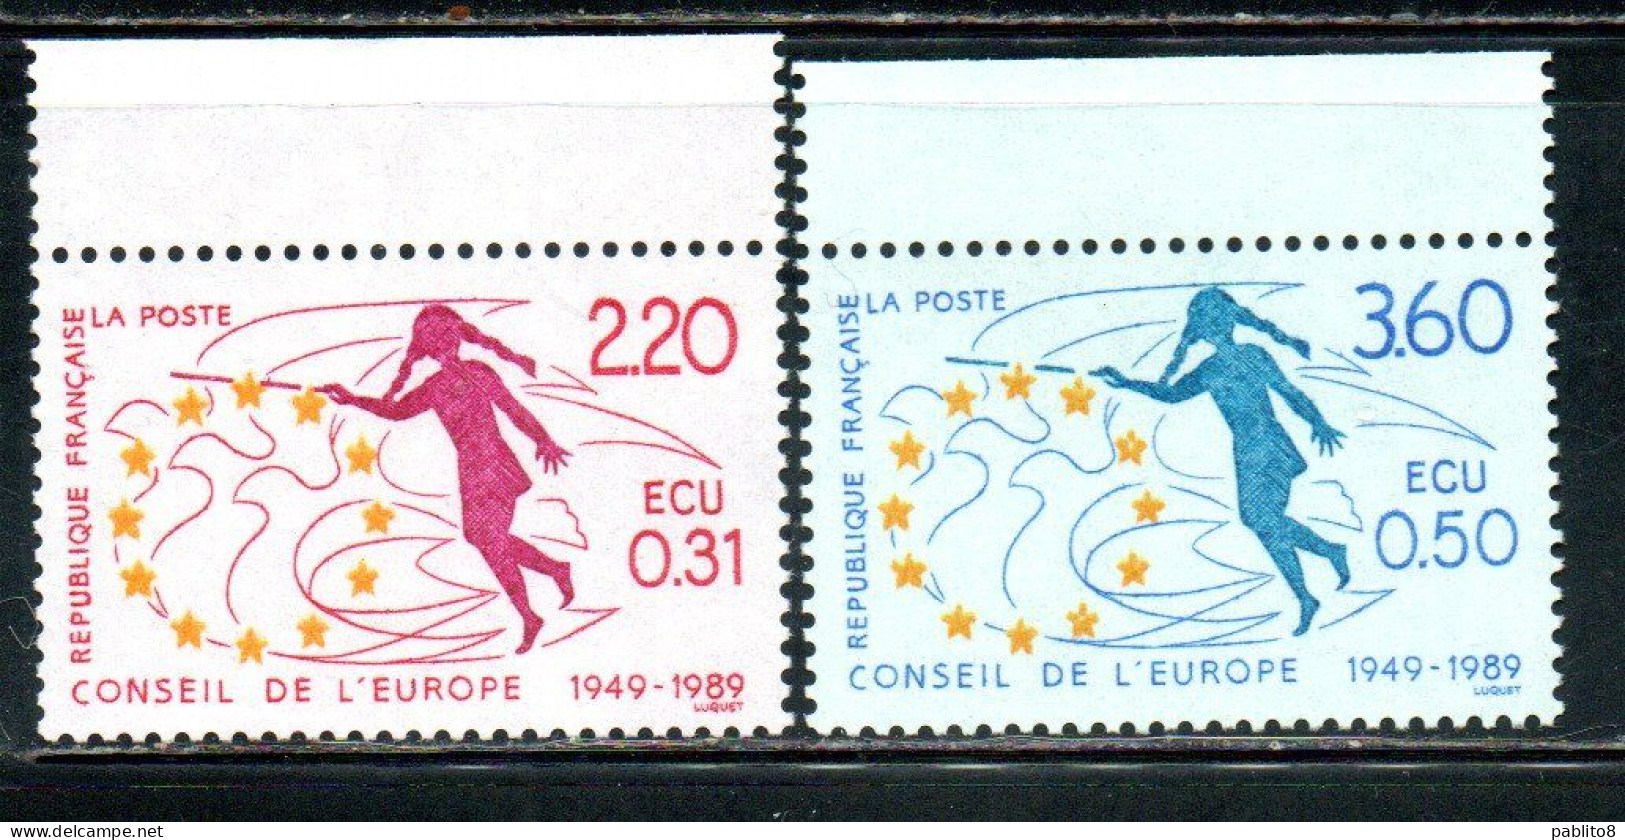 FRANCE FRANCIA 1989 CONSEIL DE L'EUROPE CONSIGLIO D'EUROPA EUROPEAN COUNCIL COMPLETE AET SERIE COMPLETA MNH - Nuovi